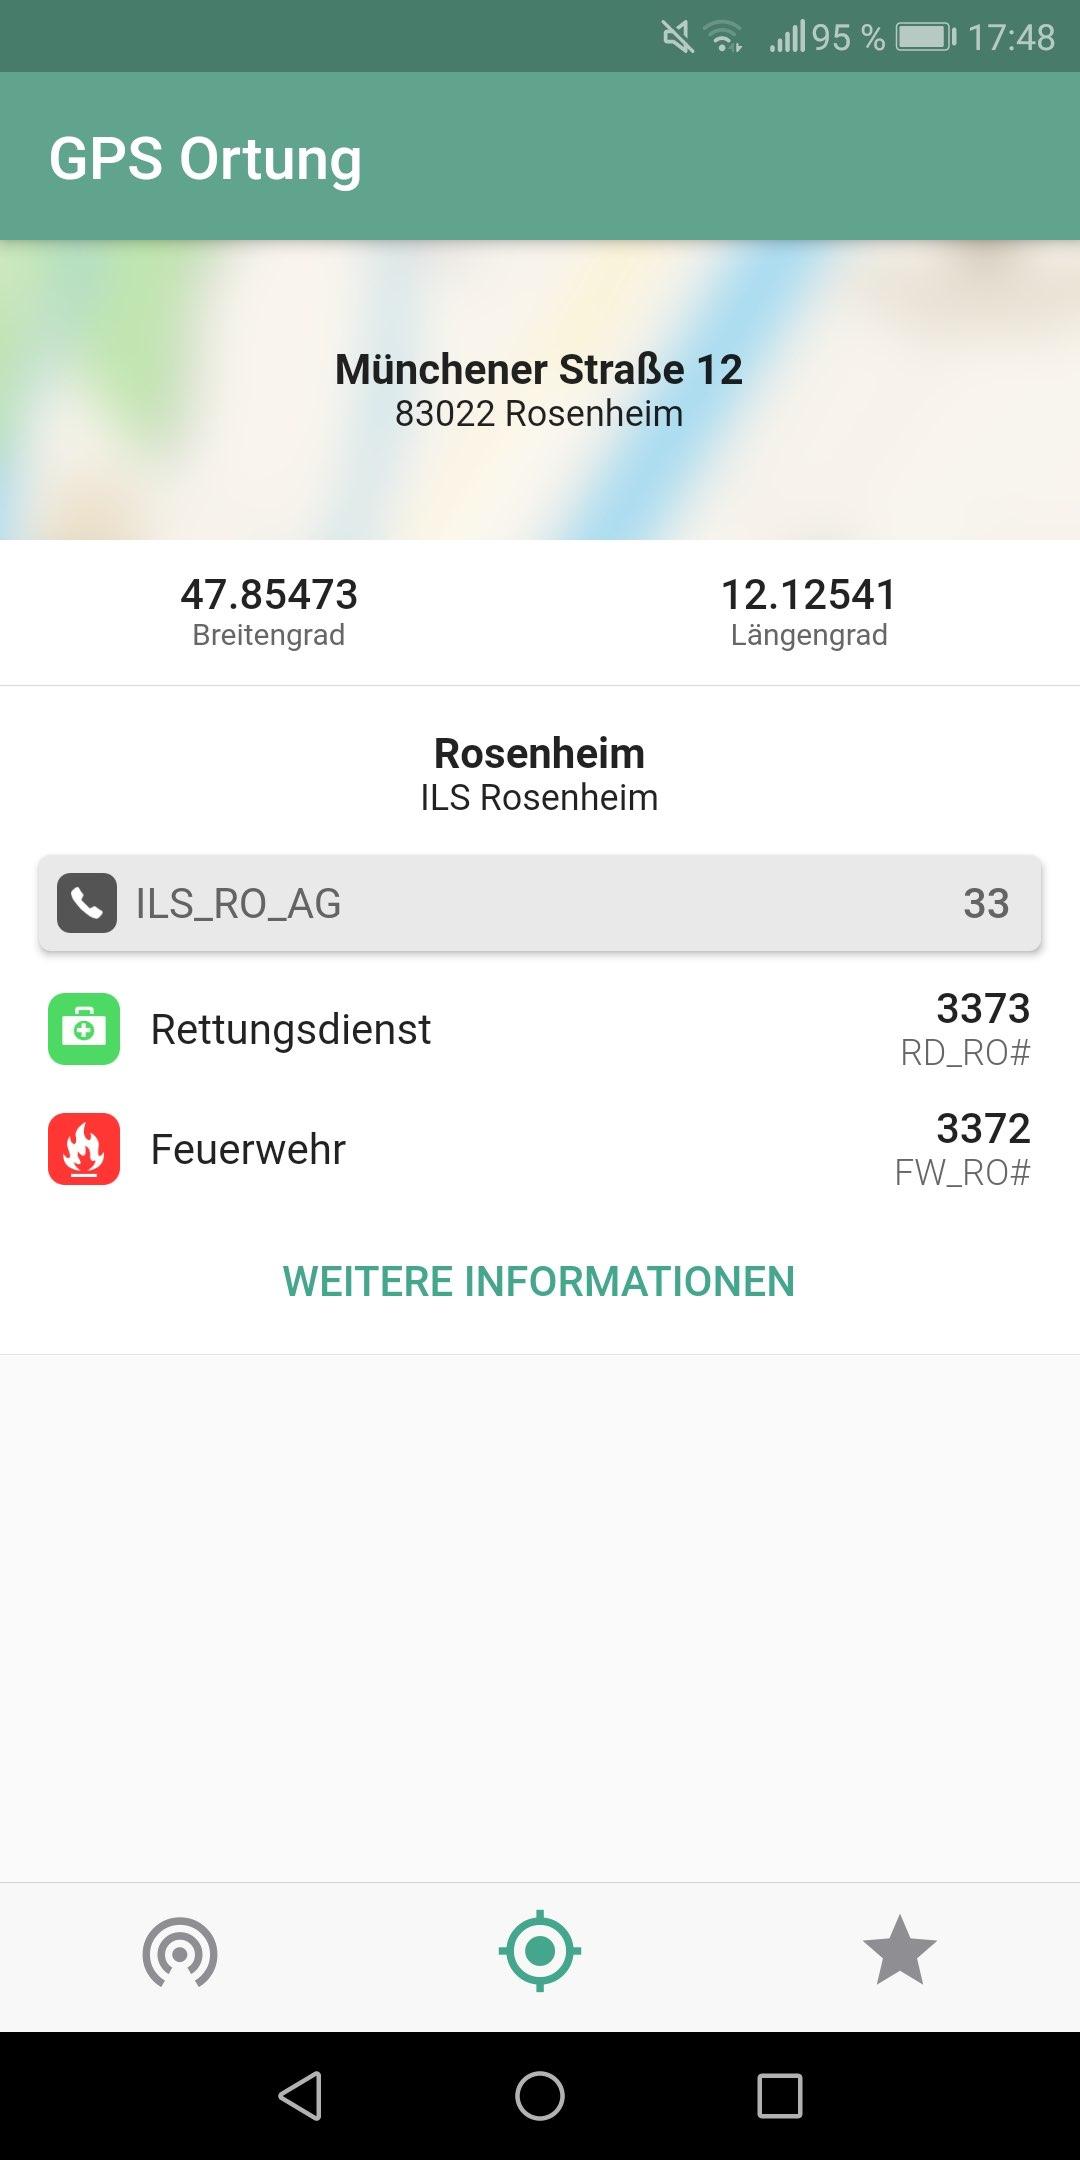 Android application BOS Funk Deutschland screenshort